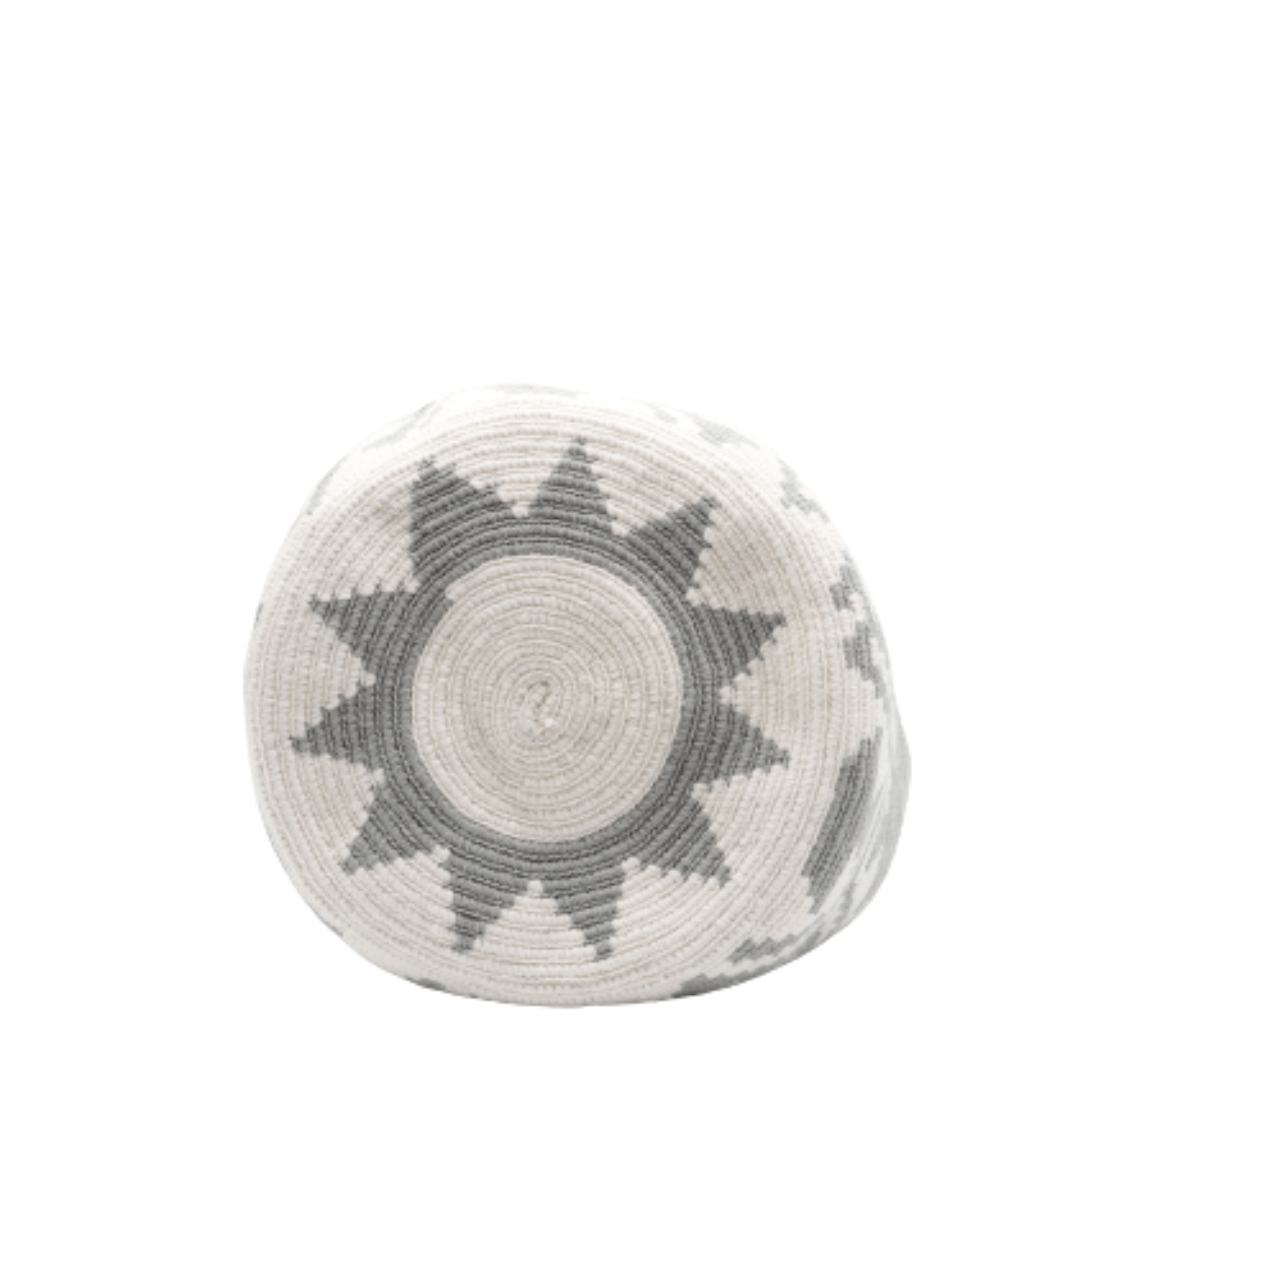 Eva Wayuu Bag - White and Fog Gray Color Blend - Elegant and Timeless Design - Handcrafted Beauty